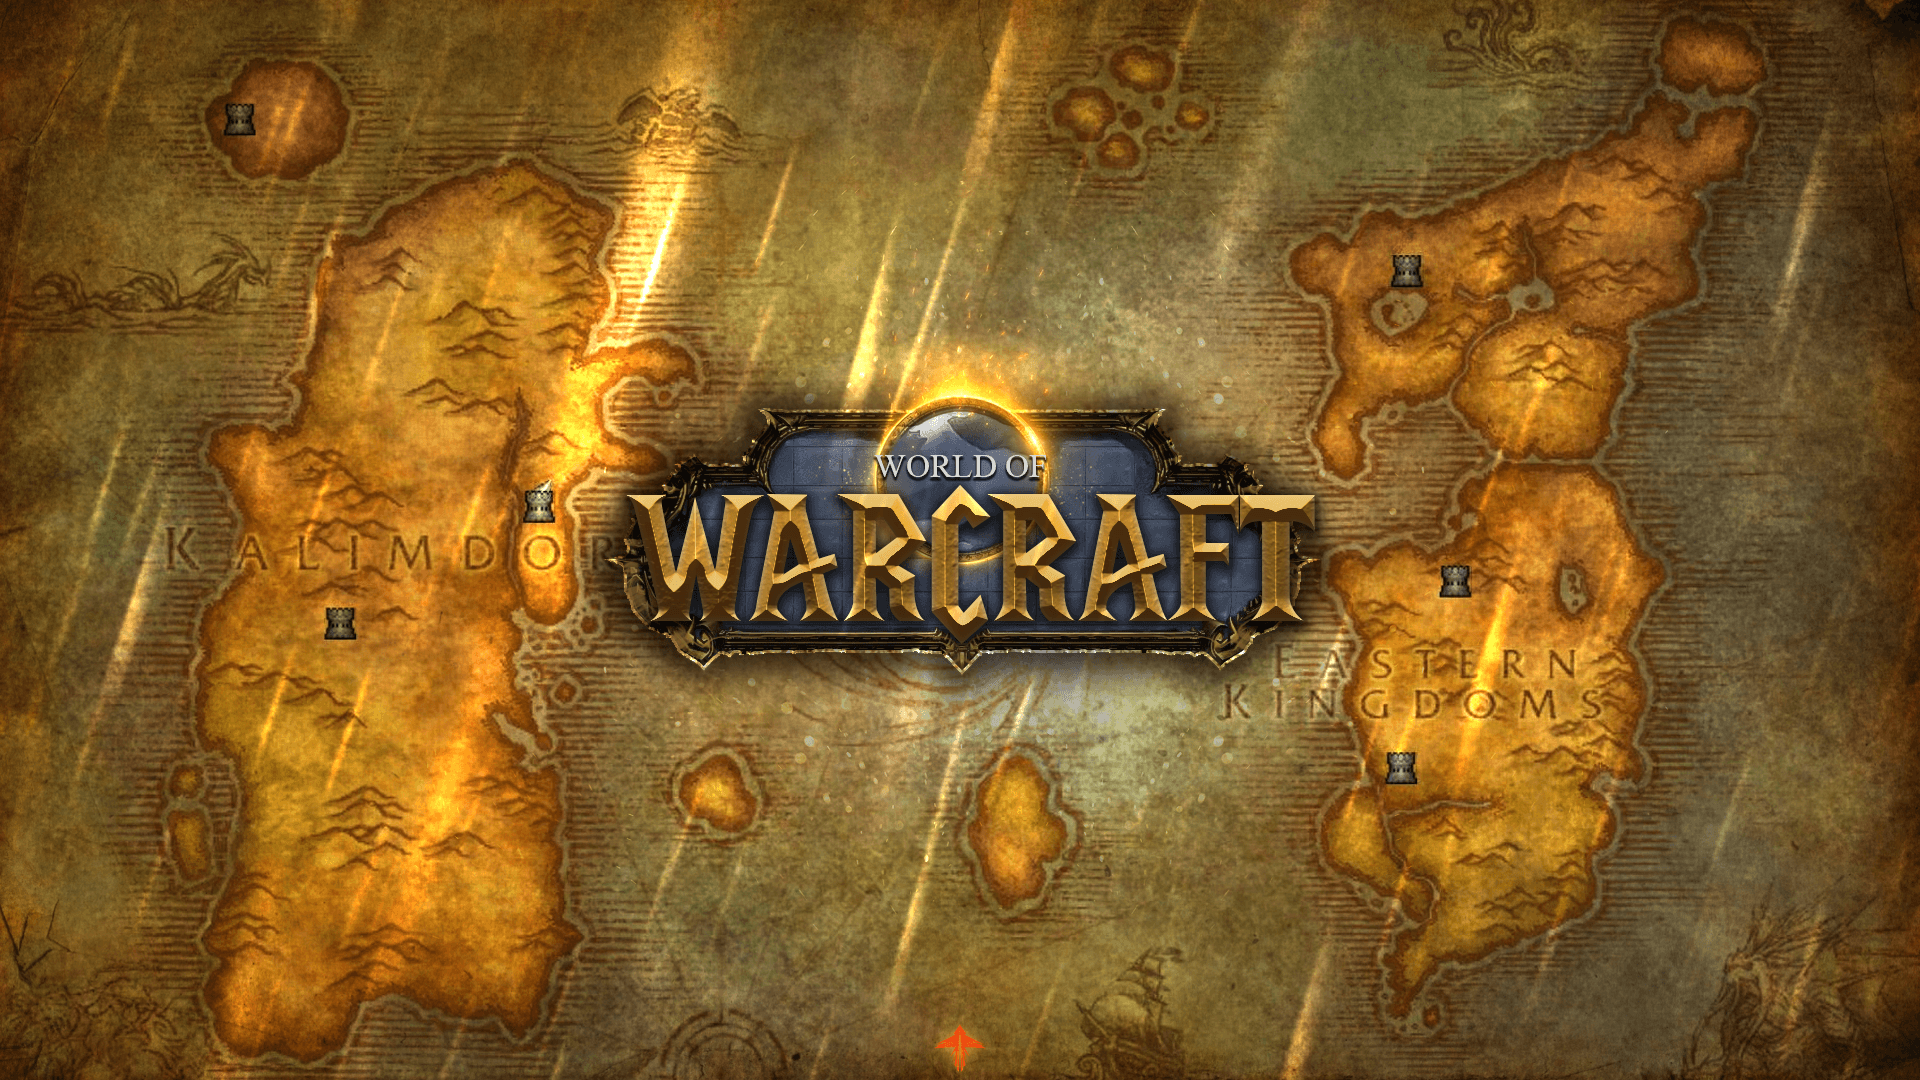 World of Warcraft classic style wallpaper